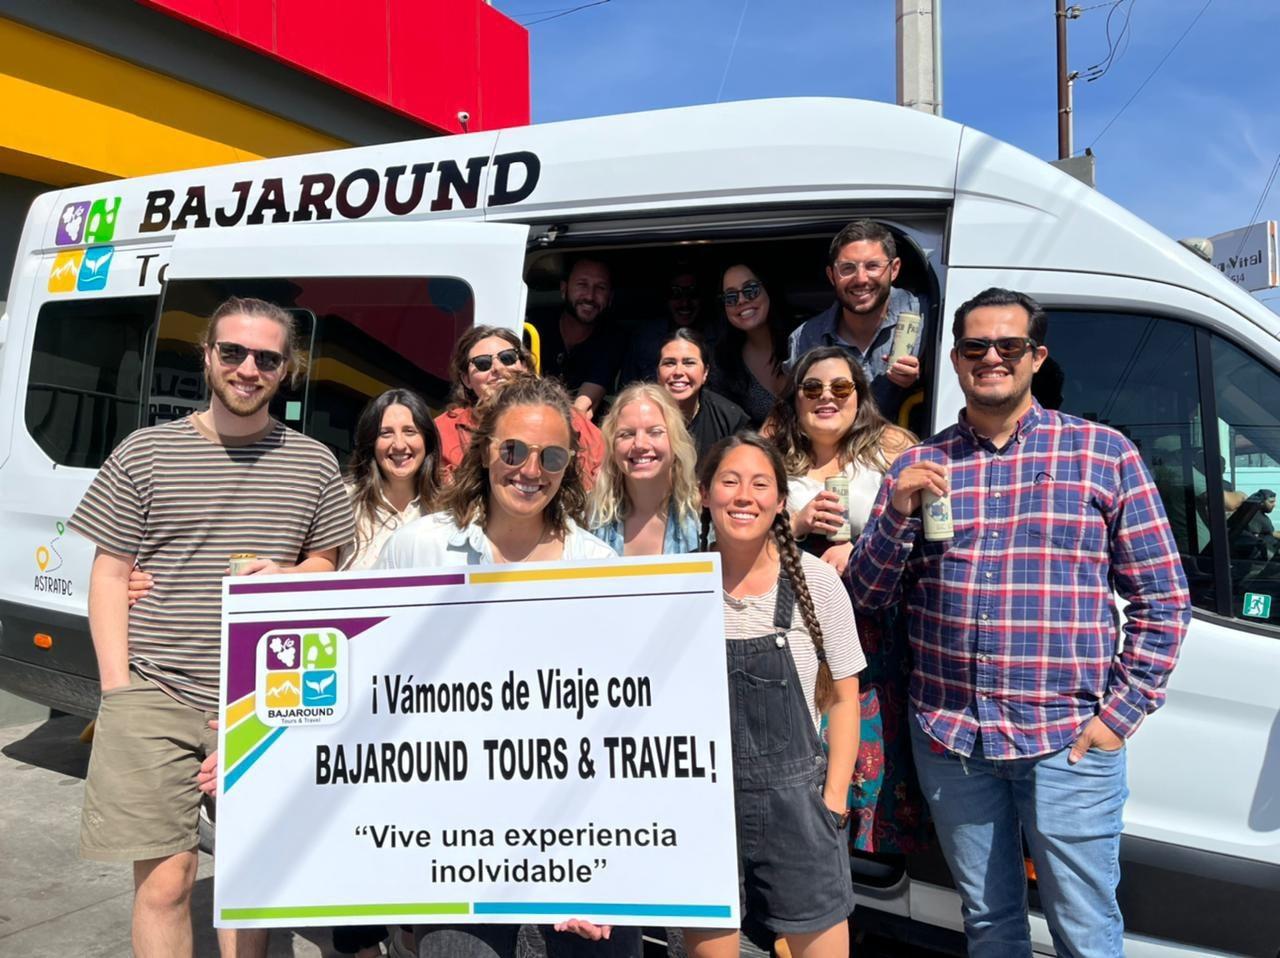 Bajaround Tours & travel